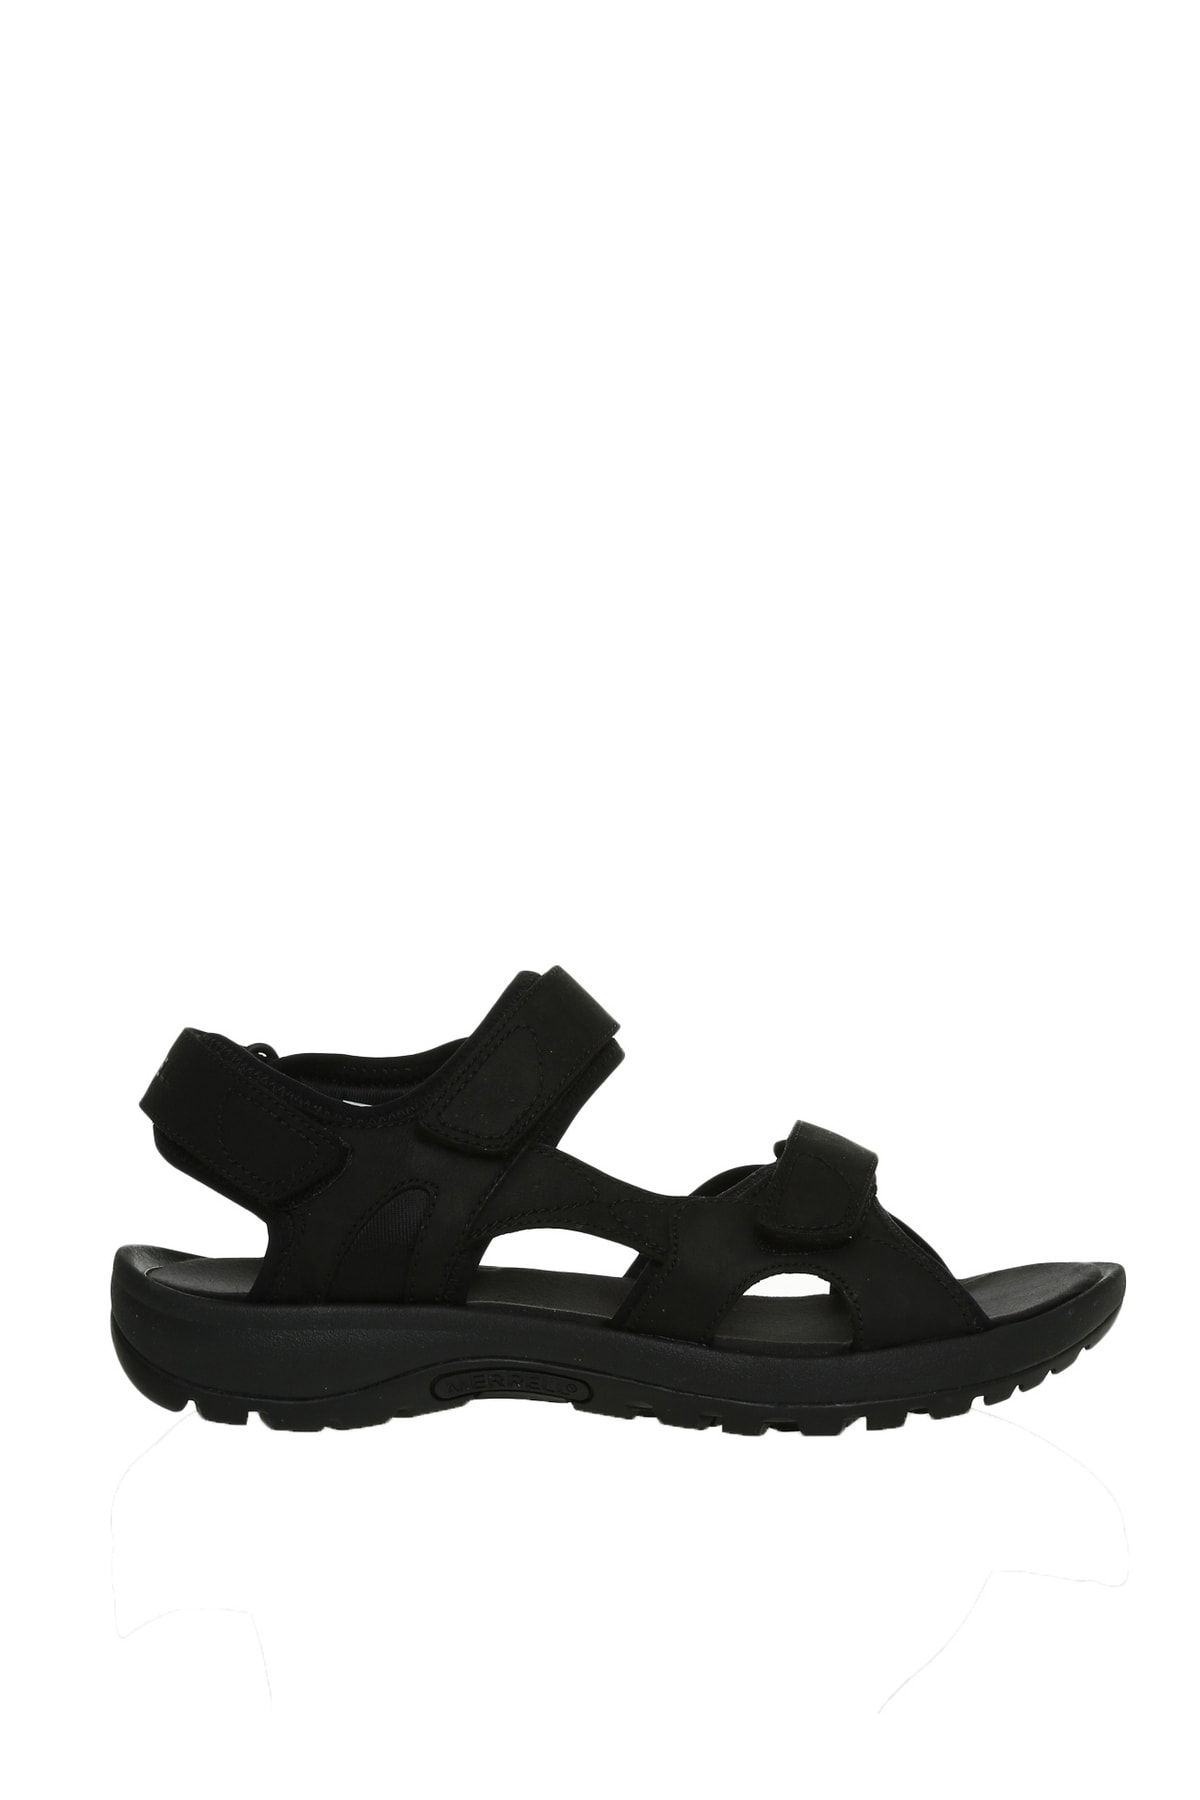 Merrell Sandspur 2 Convert Siyah Koşu Ayakkabısı